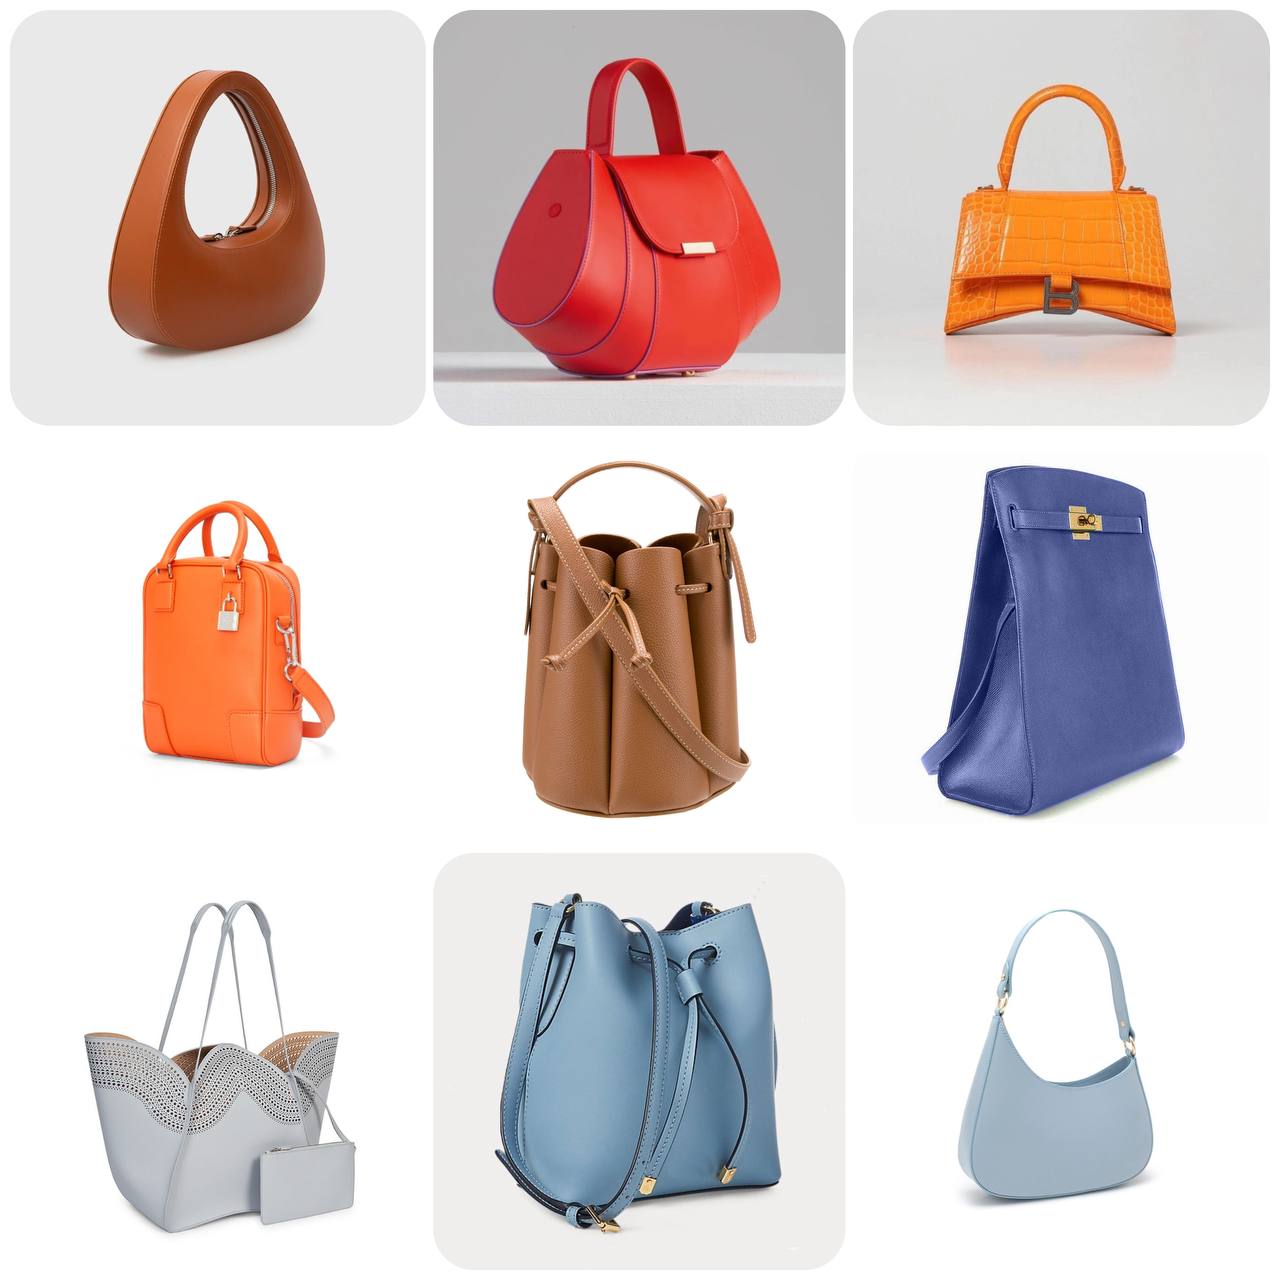 Fashion Bags Patterns